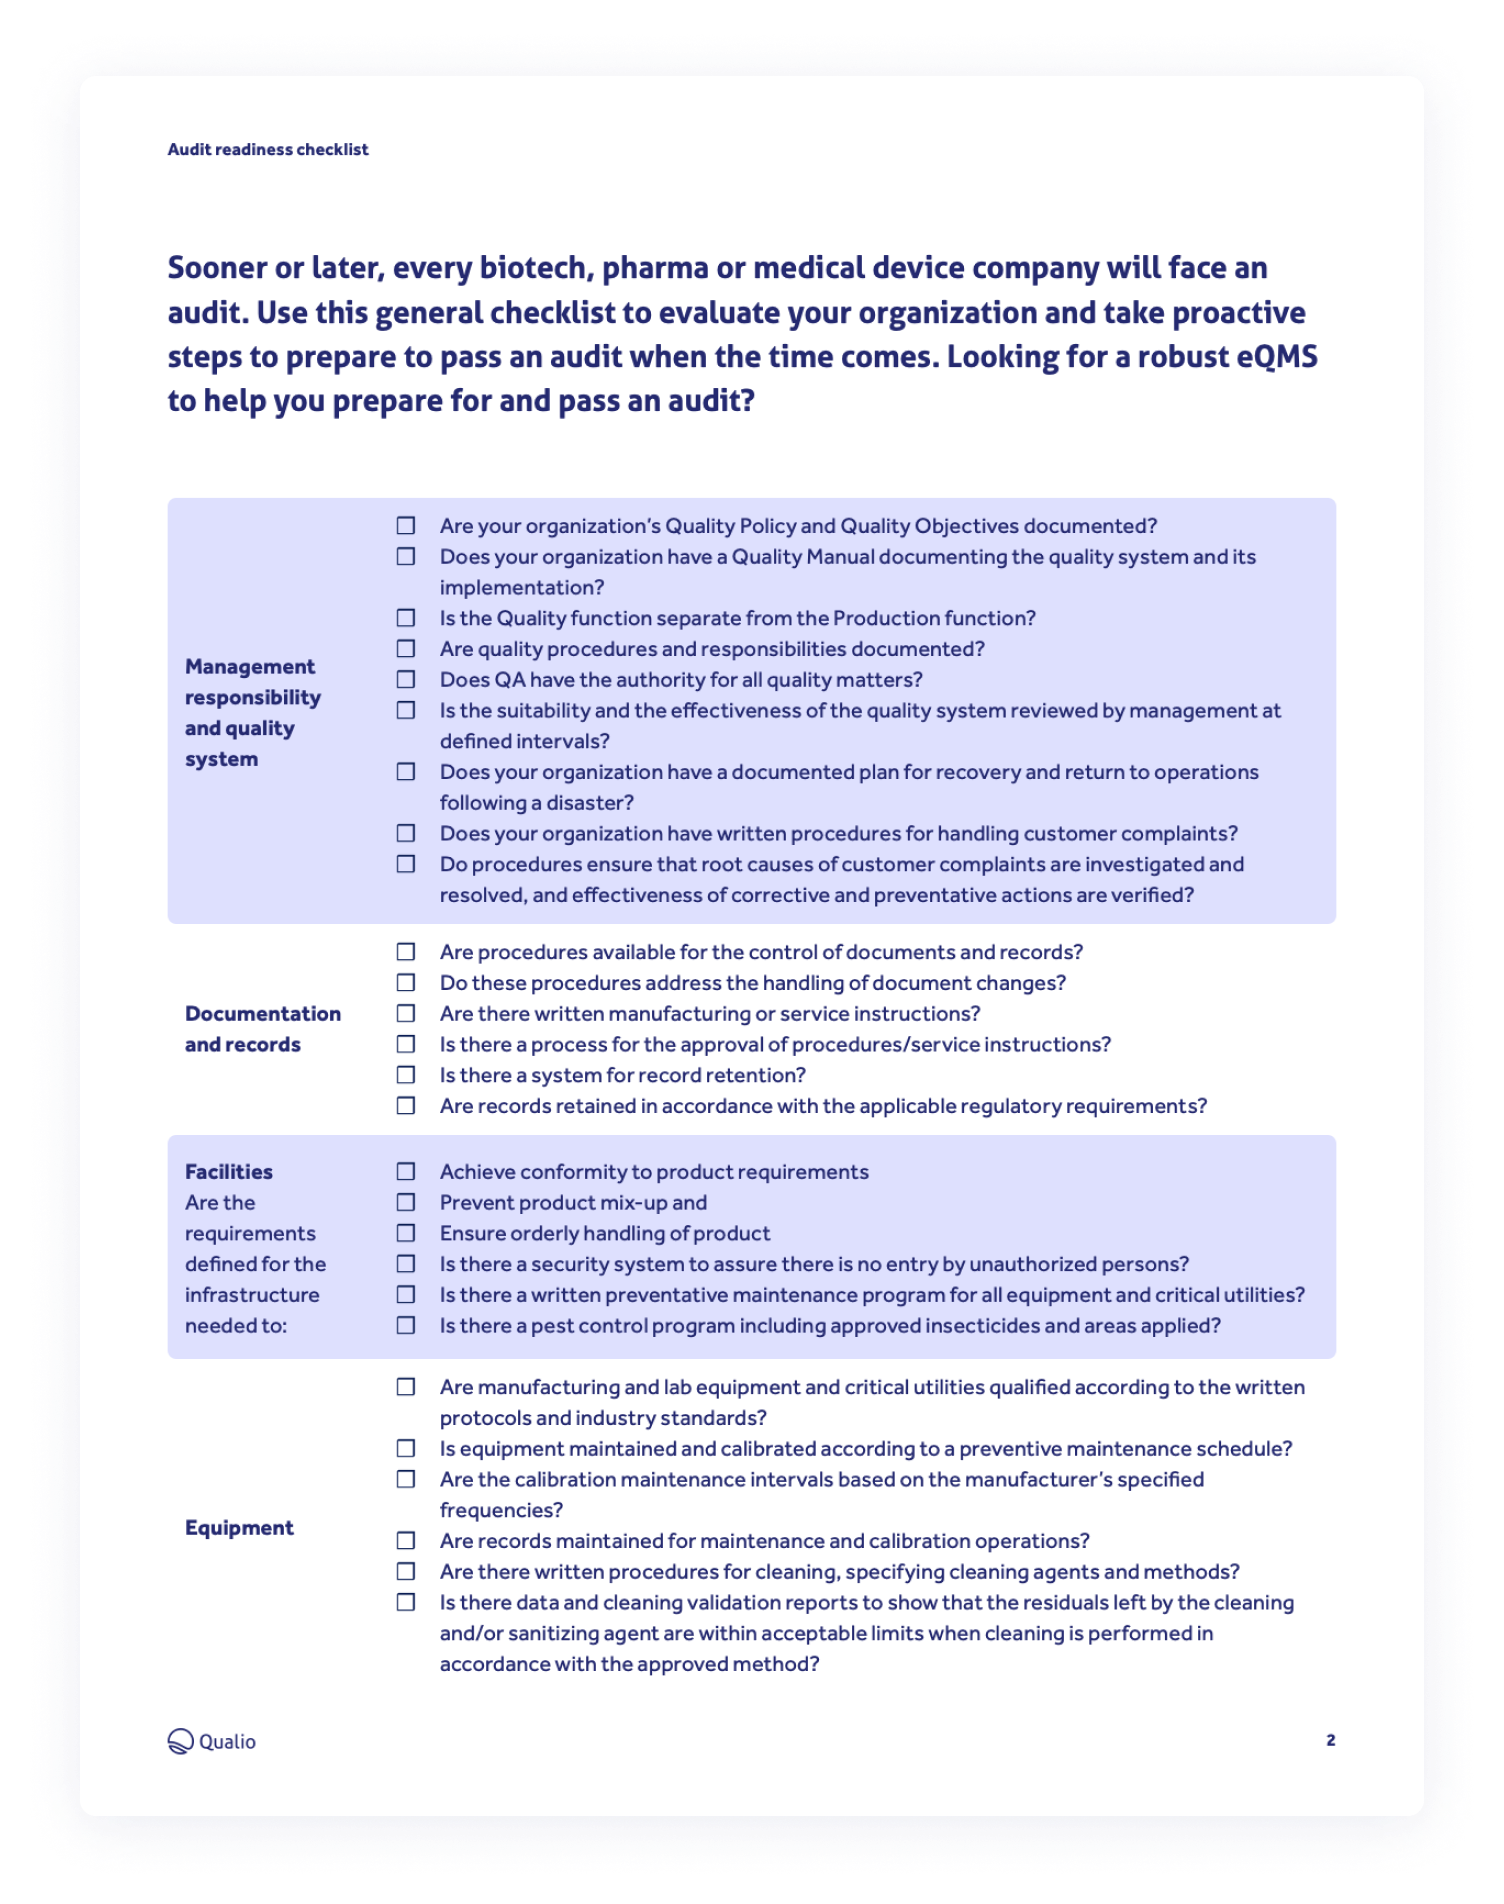 lp-image_audit-readiness-checklist_1